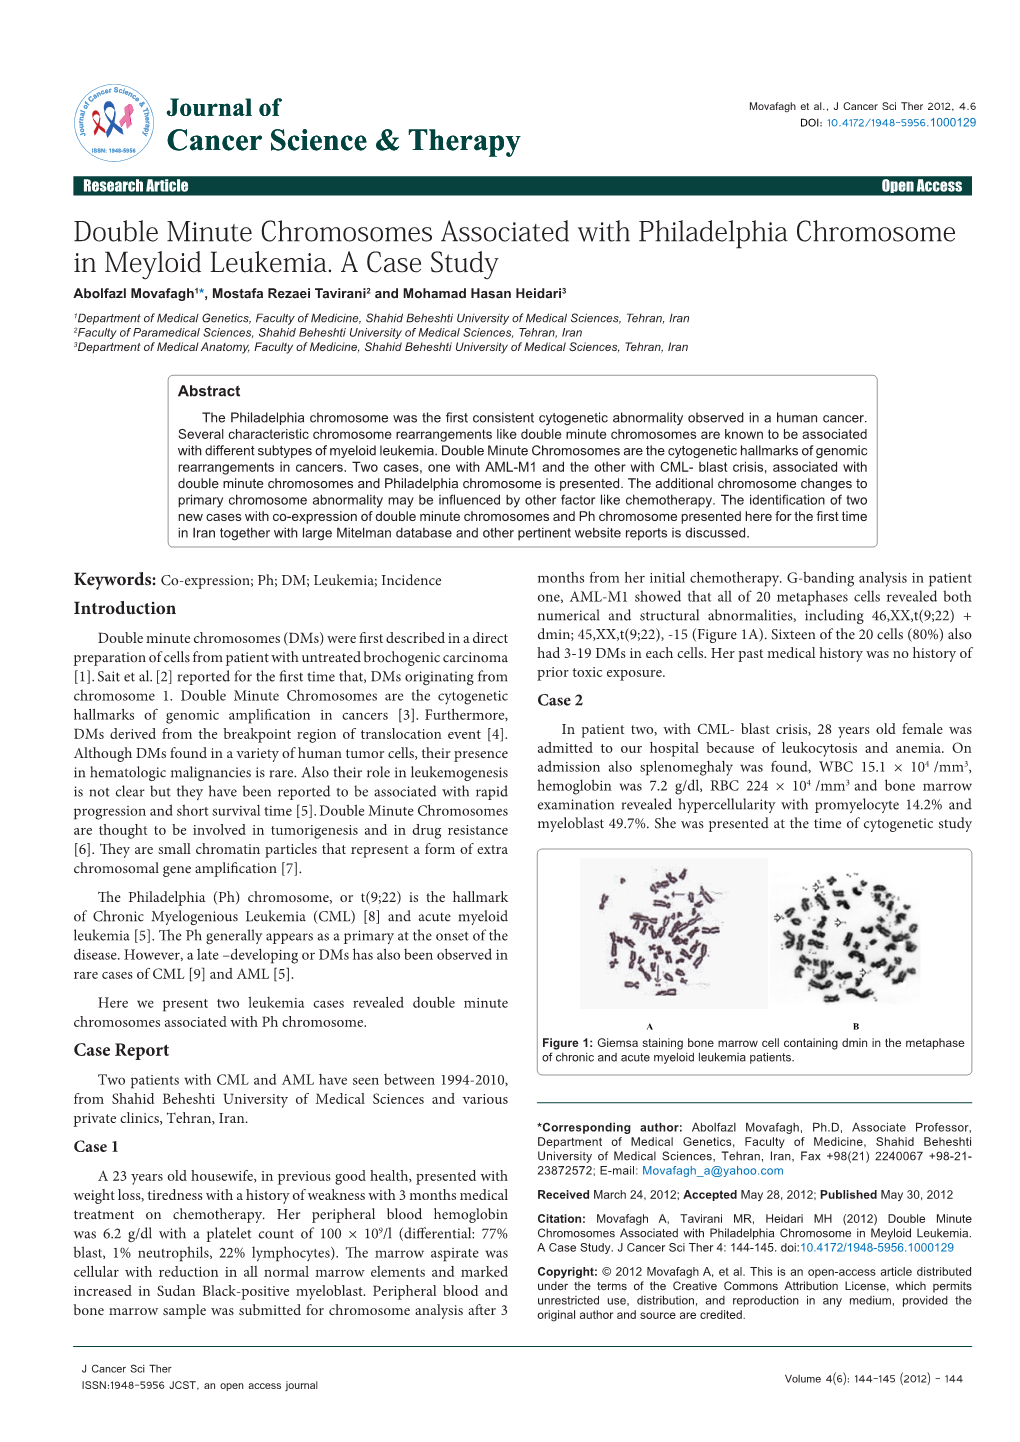 Double Minute Chromosomes Associated with Philadelphia Chromosome in Meyloid Leukemia